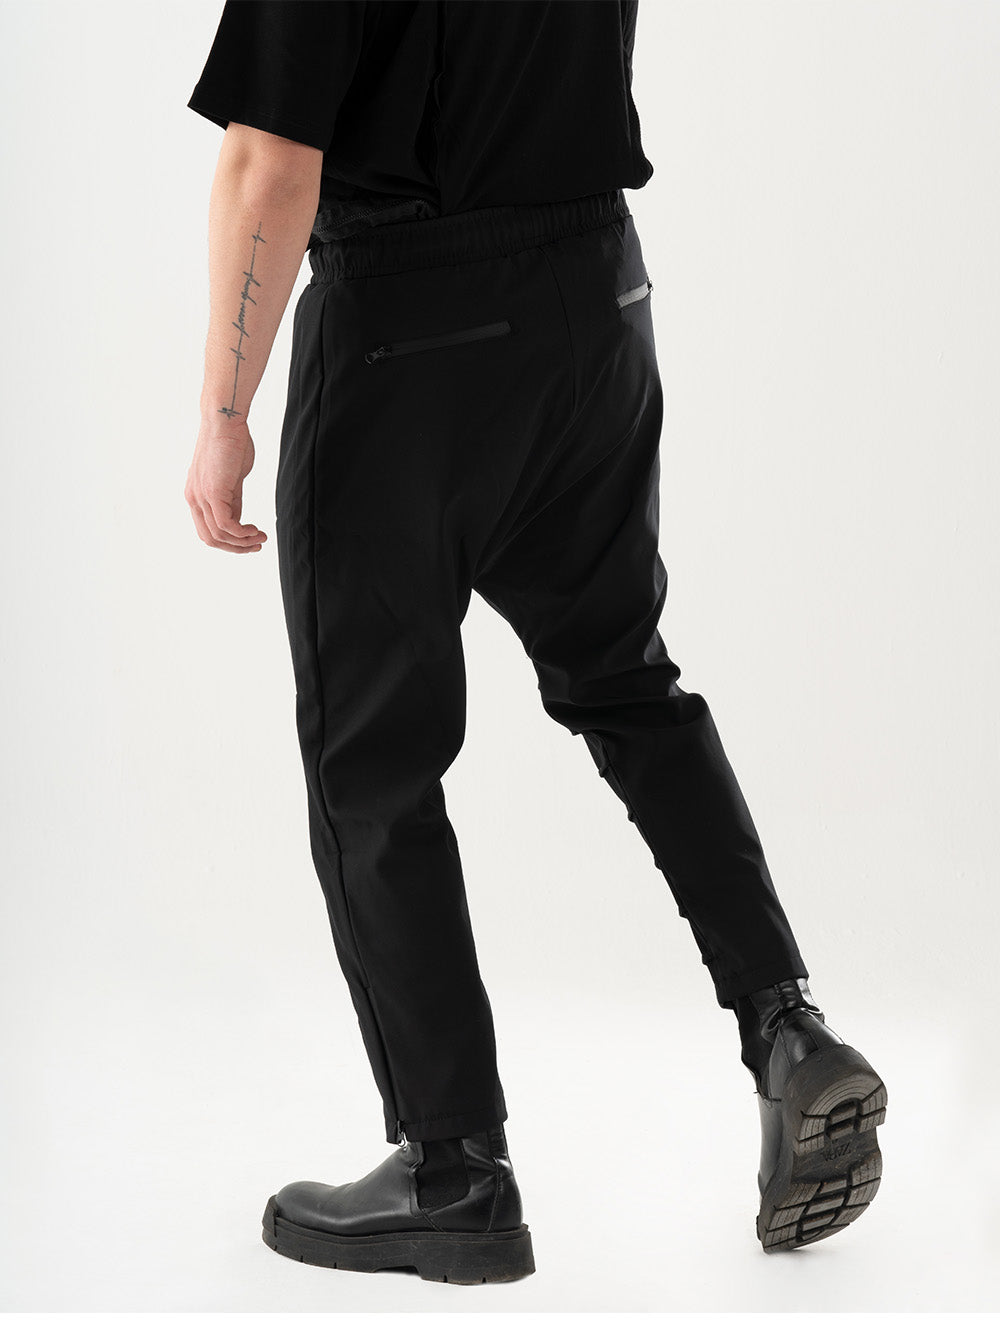 A man wearing an Invogue joggers t-shirt and Invogue joggers pants.